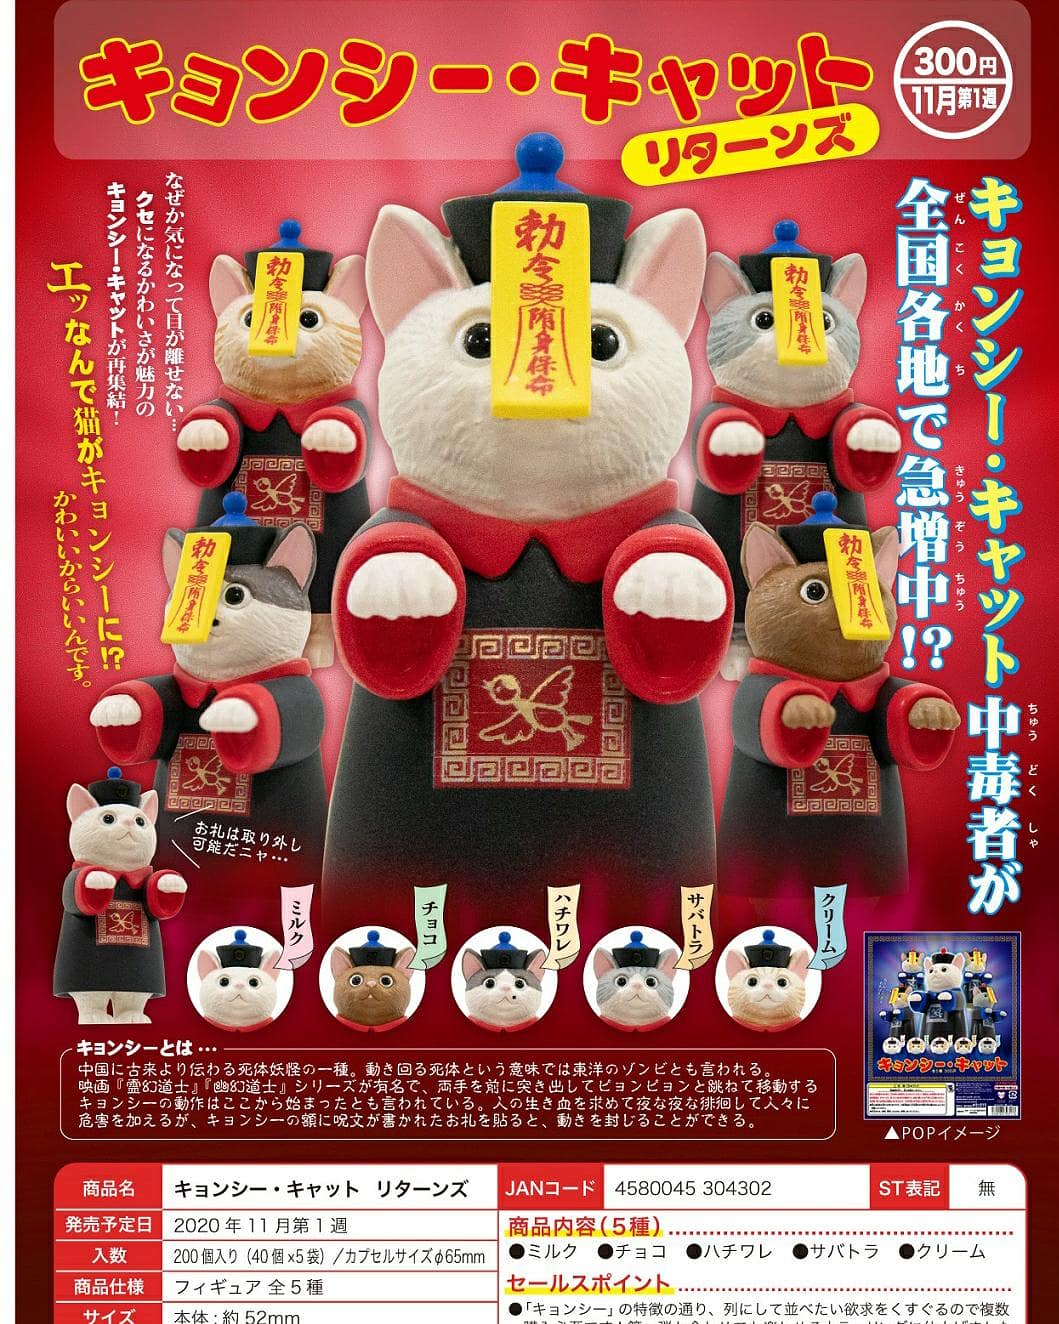 Kitan Club Chinese Vampire Cat Capsule Gashapon Toy Complete Figures set of 5 Vol.2